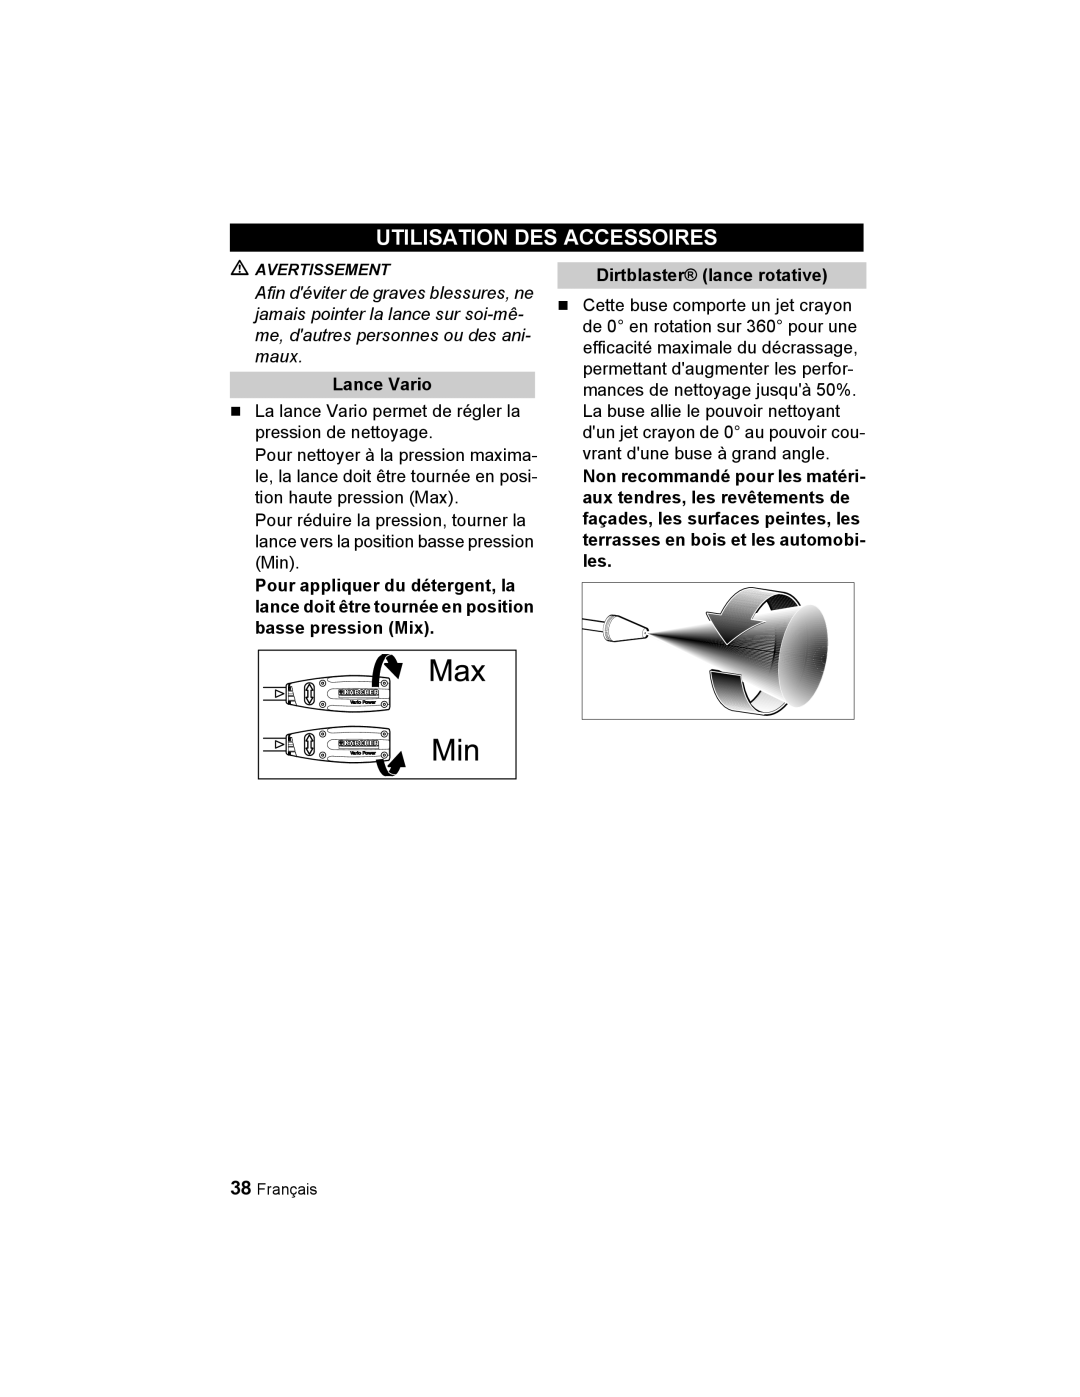 Karcher K 2.56 M manual Utilisation Des Accessoires, Lance Vario, Dirtblaster lance rotative 